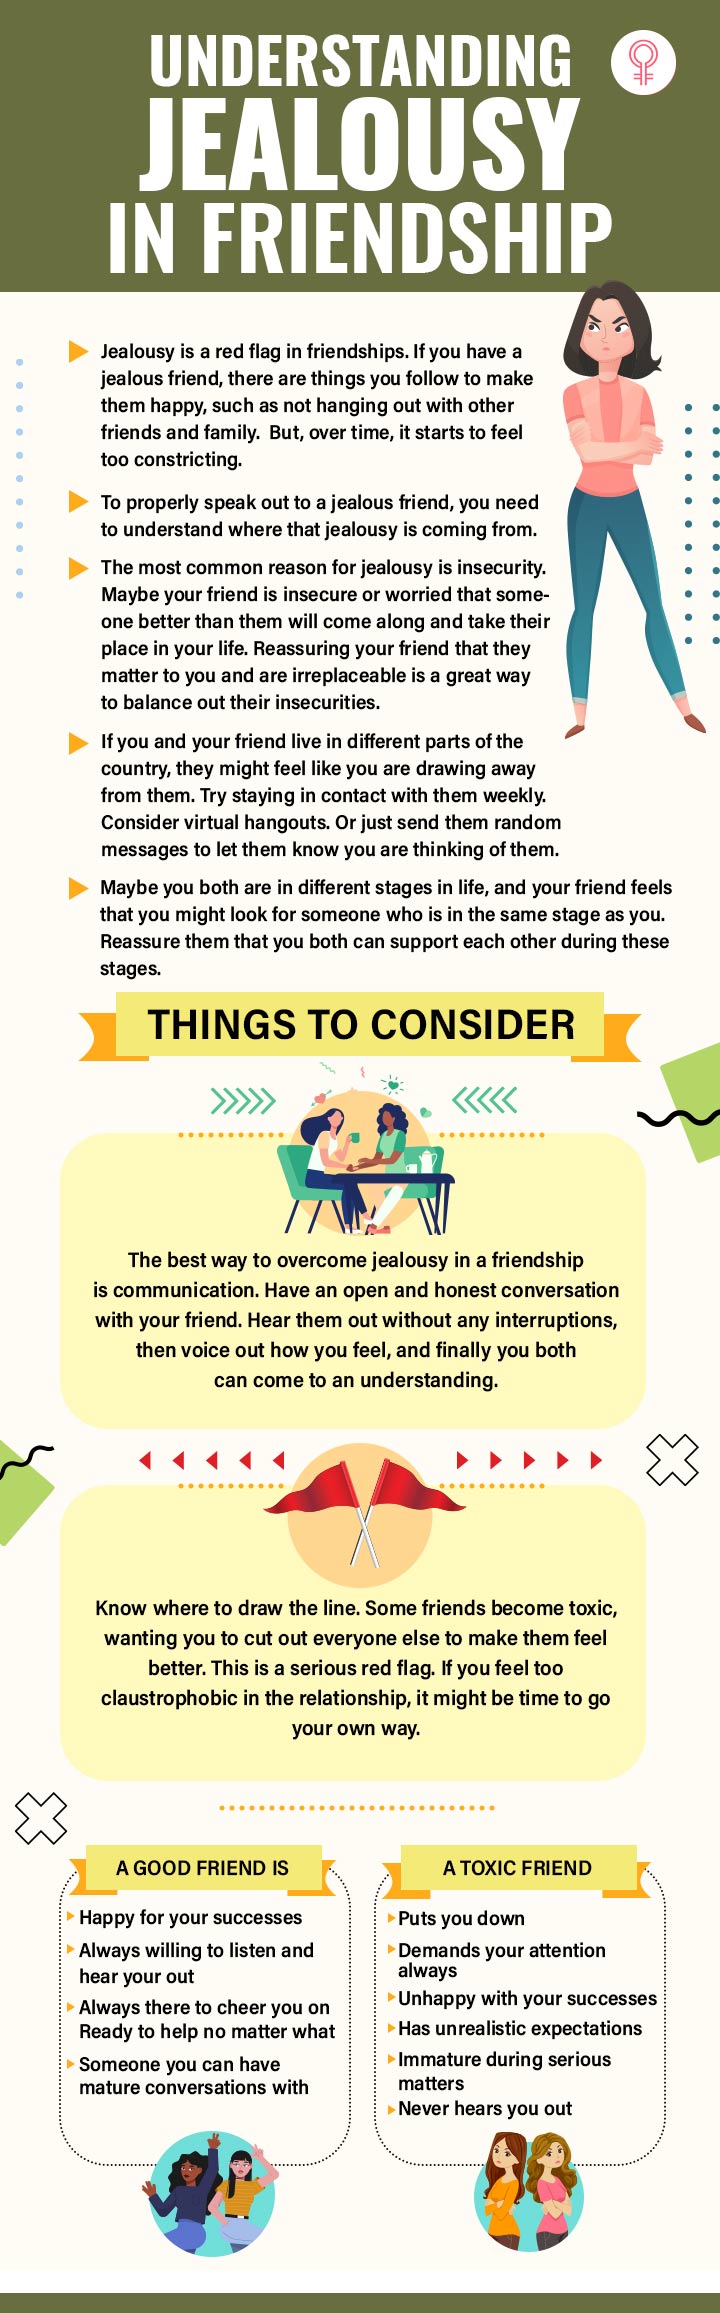 understanding jealousy in friendship (infographic)